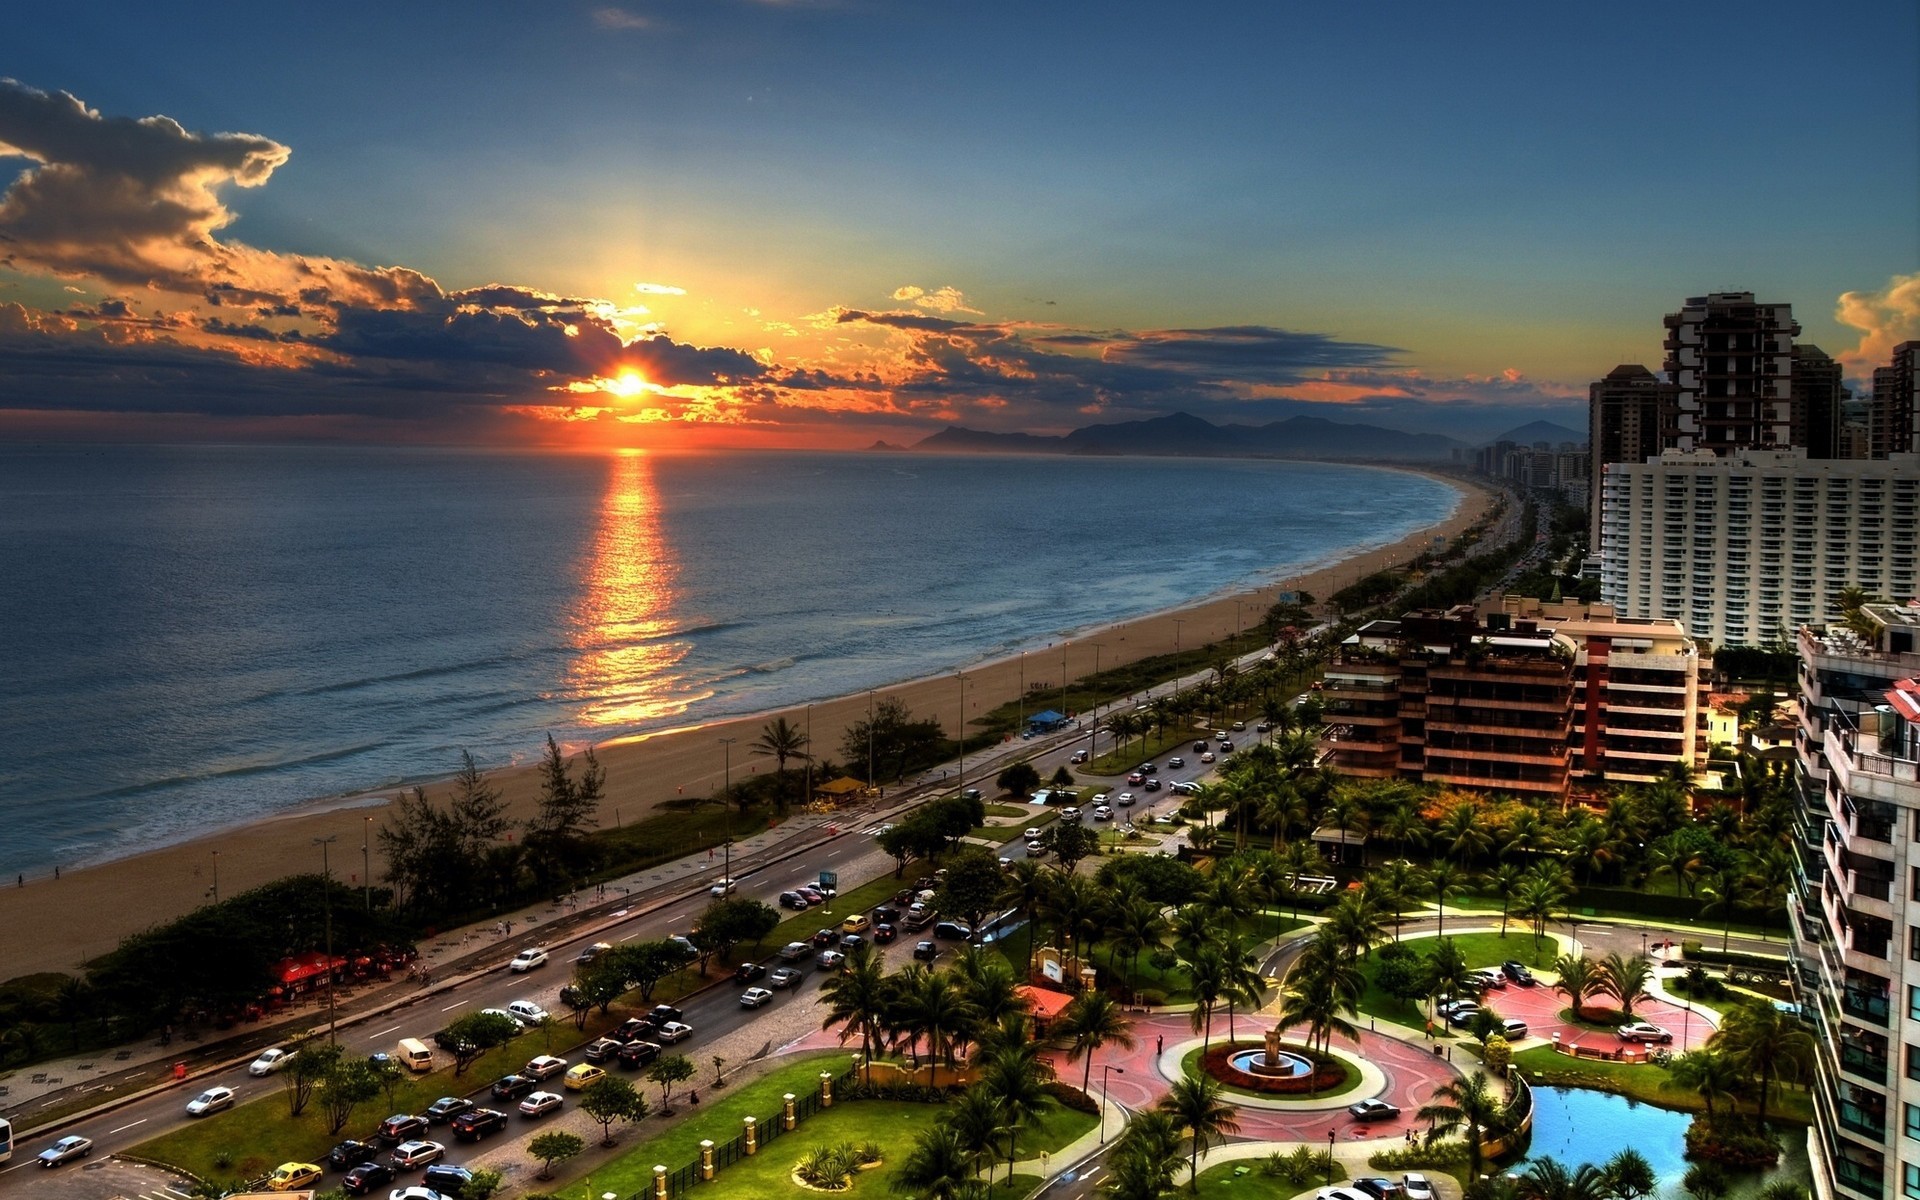 Rio De Janeiro, Brazil, City, Road, Car, Beach, Sea, Sunset, Clouds, Hotels, Palm Trees Wallpaper